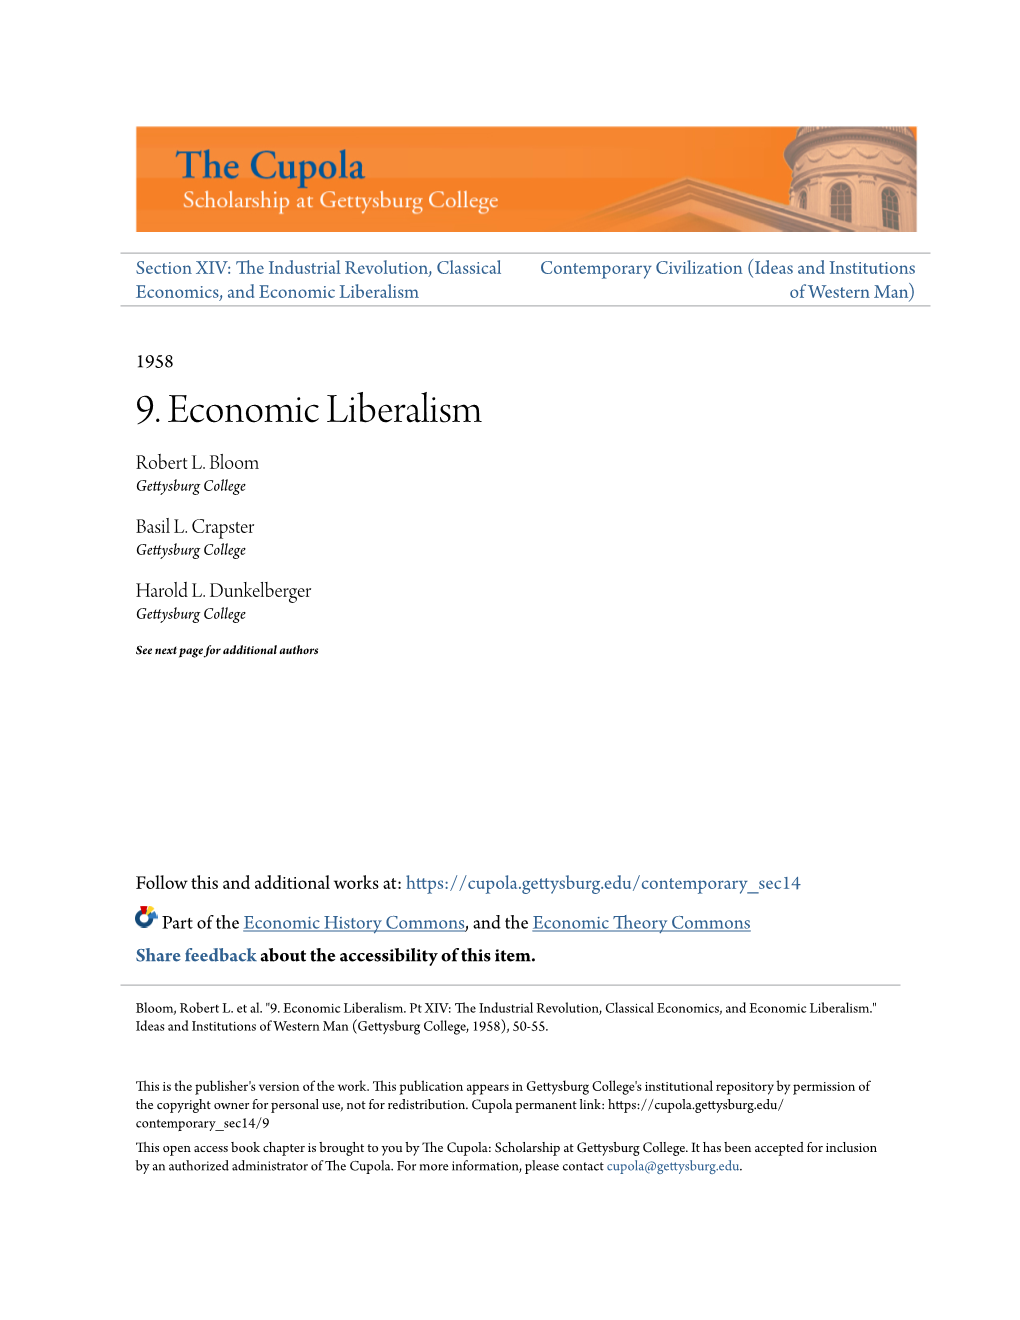 9. Economic Liberalism Robert L